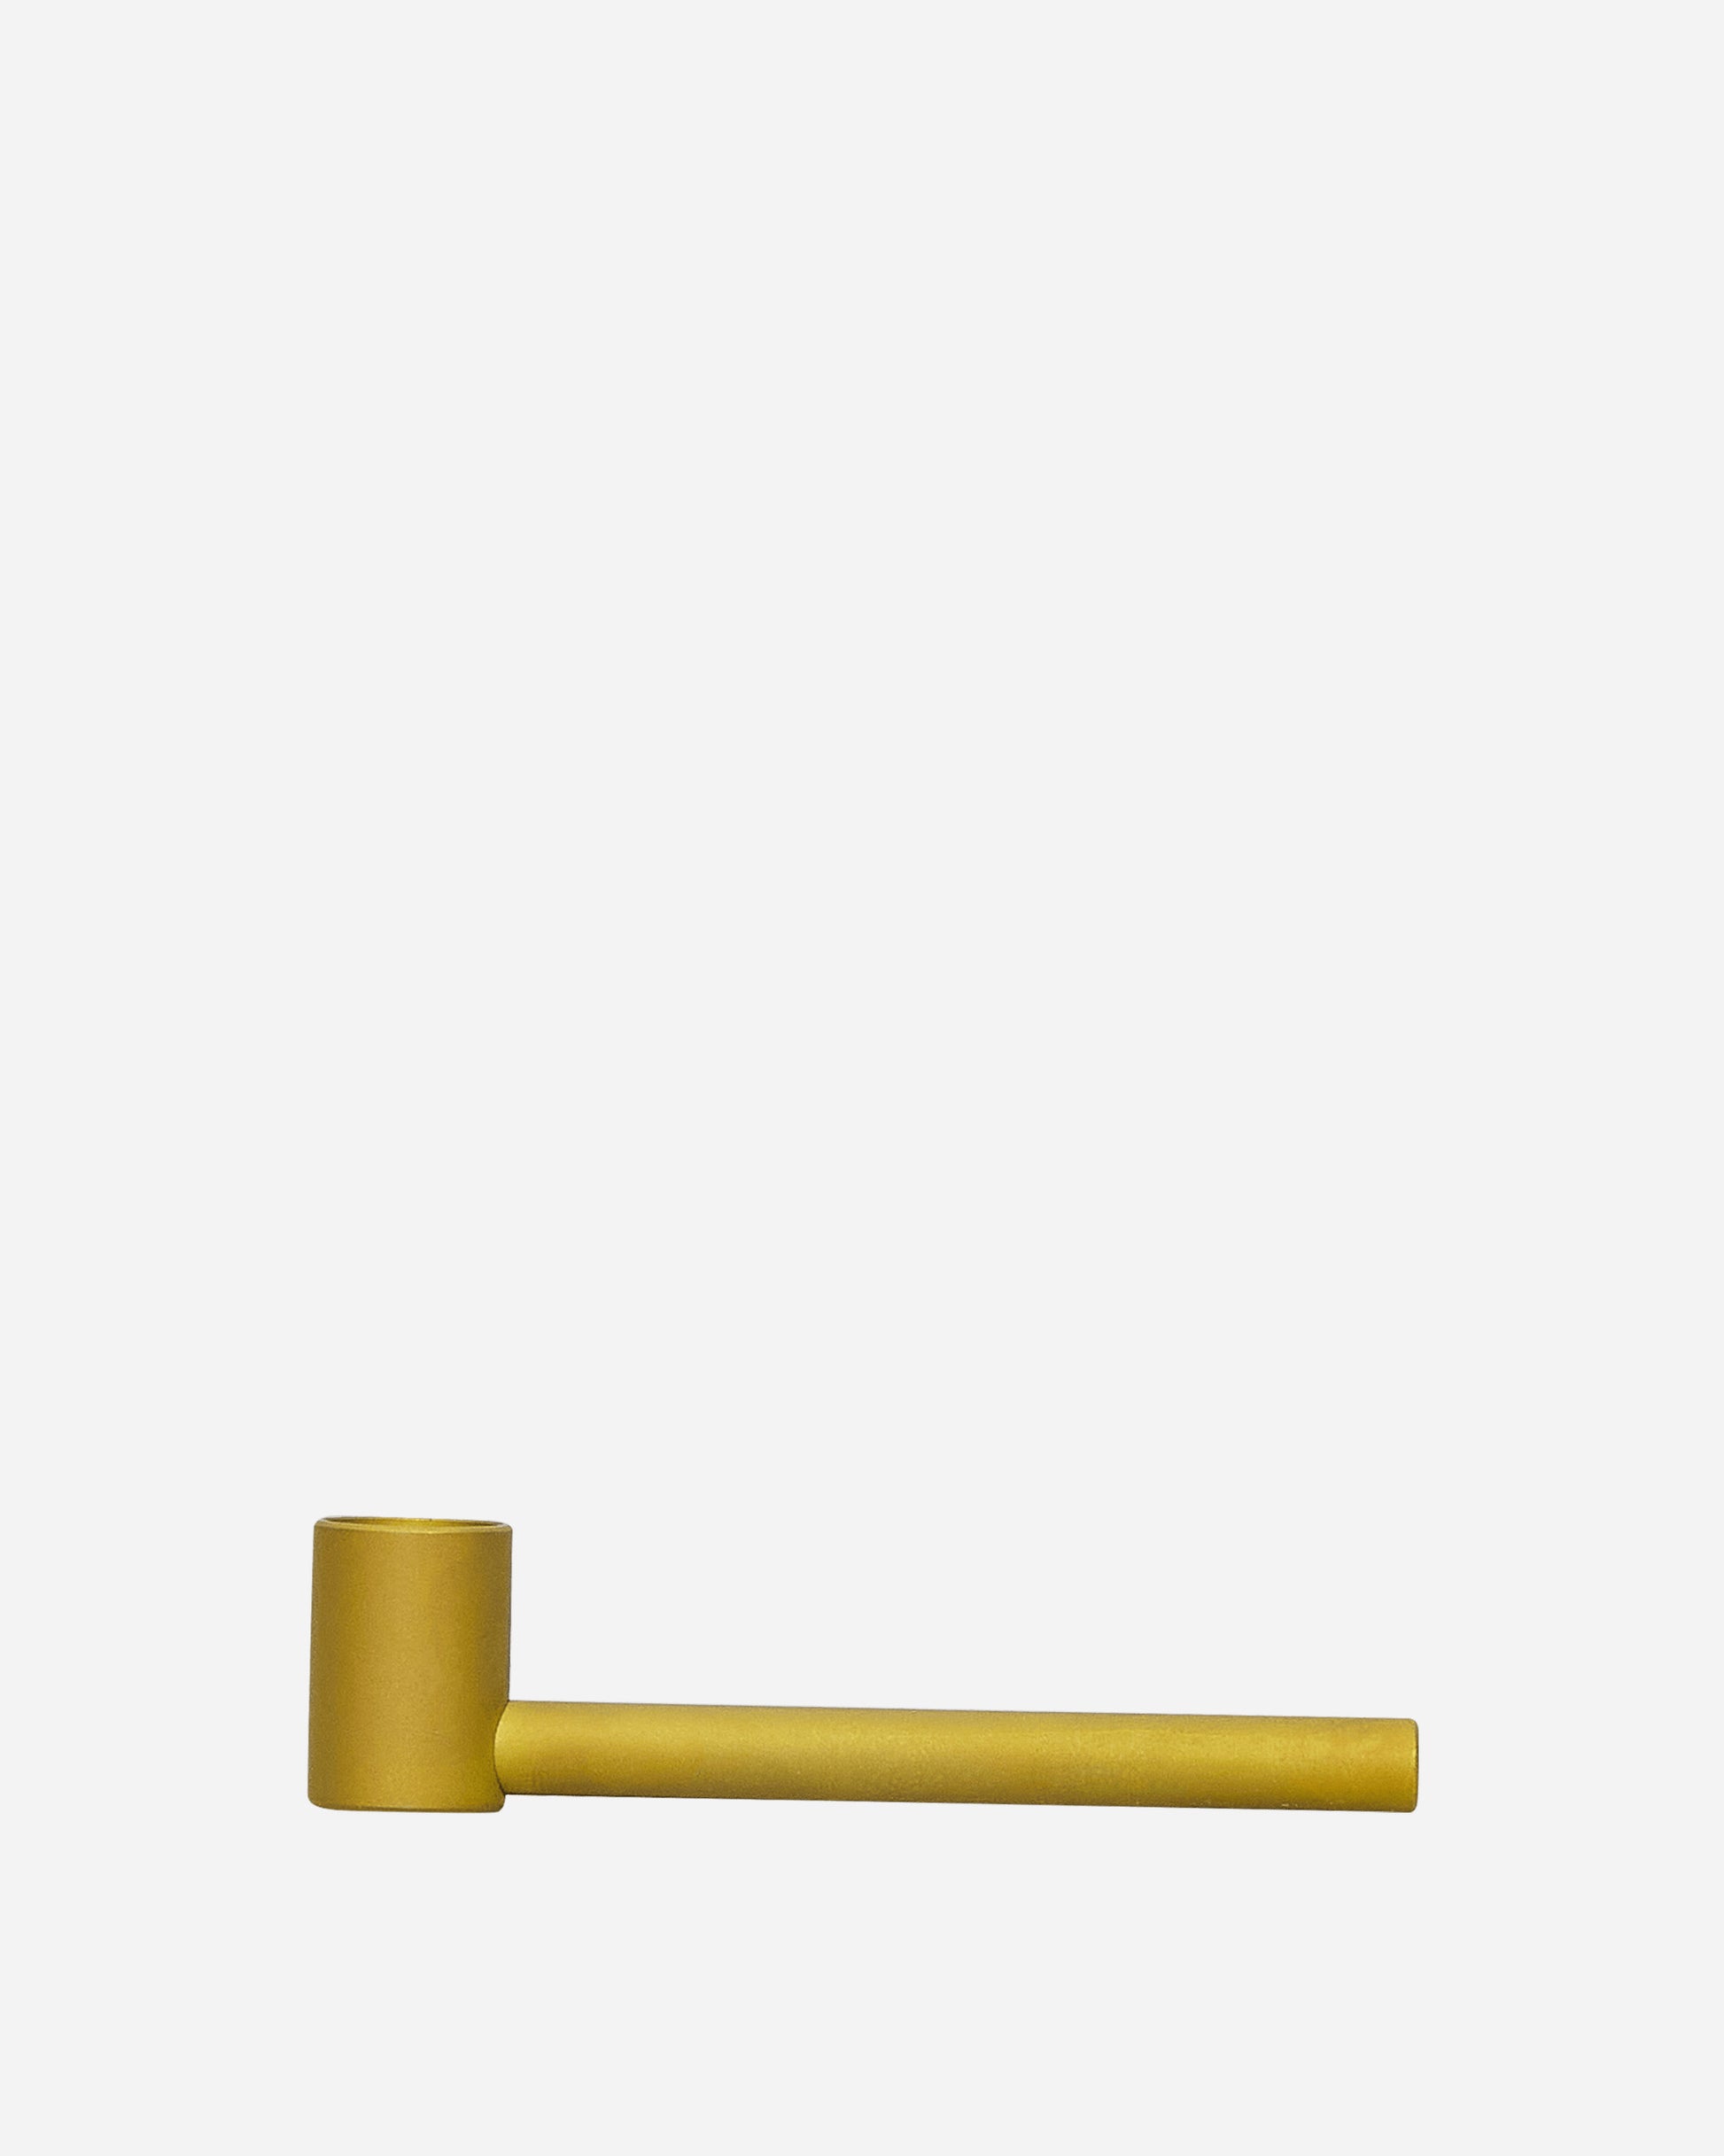 Dangle Supply Ti Cobb Titanium Pipe- Gold Gold Homeware Design Items PIPE02 001